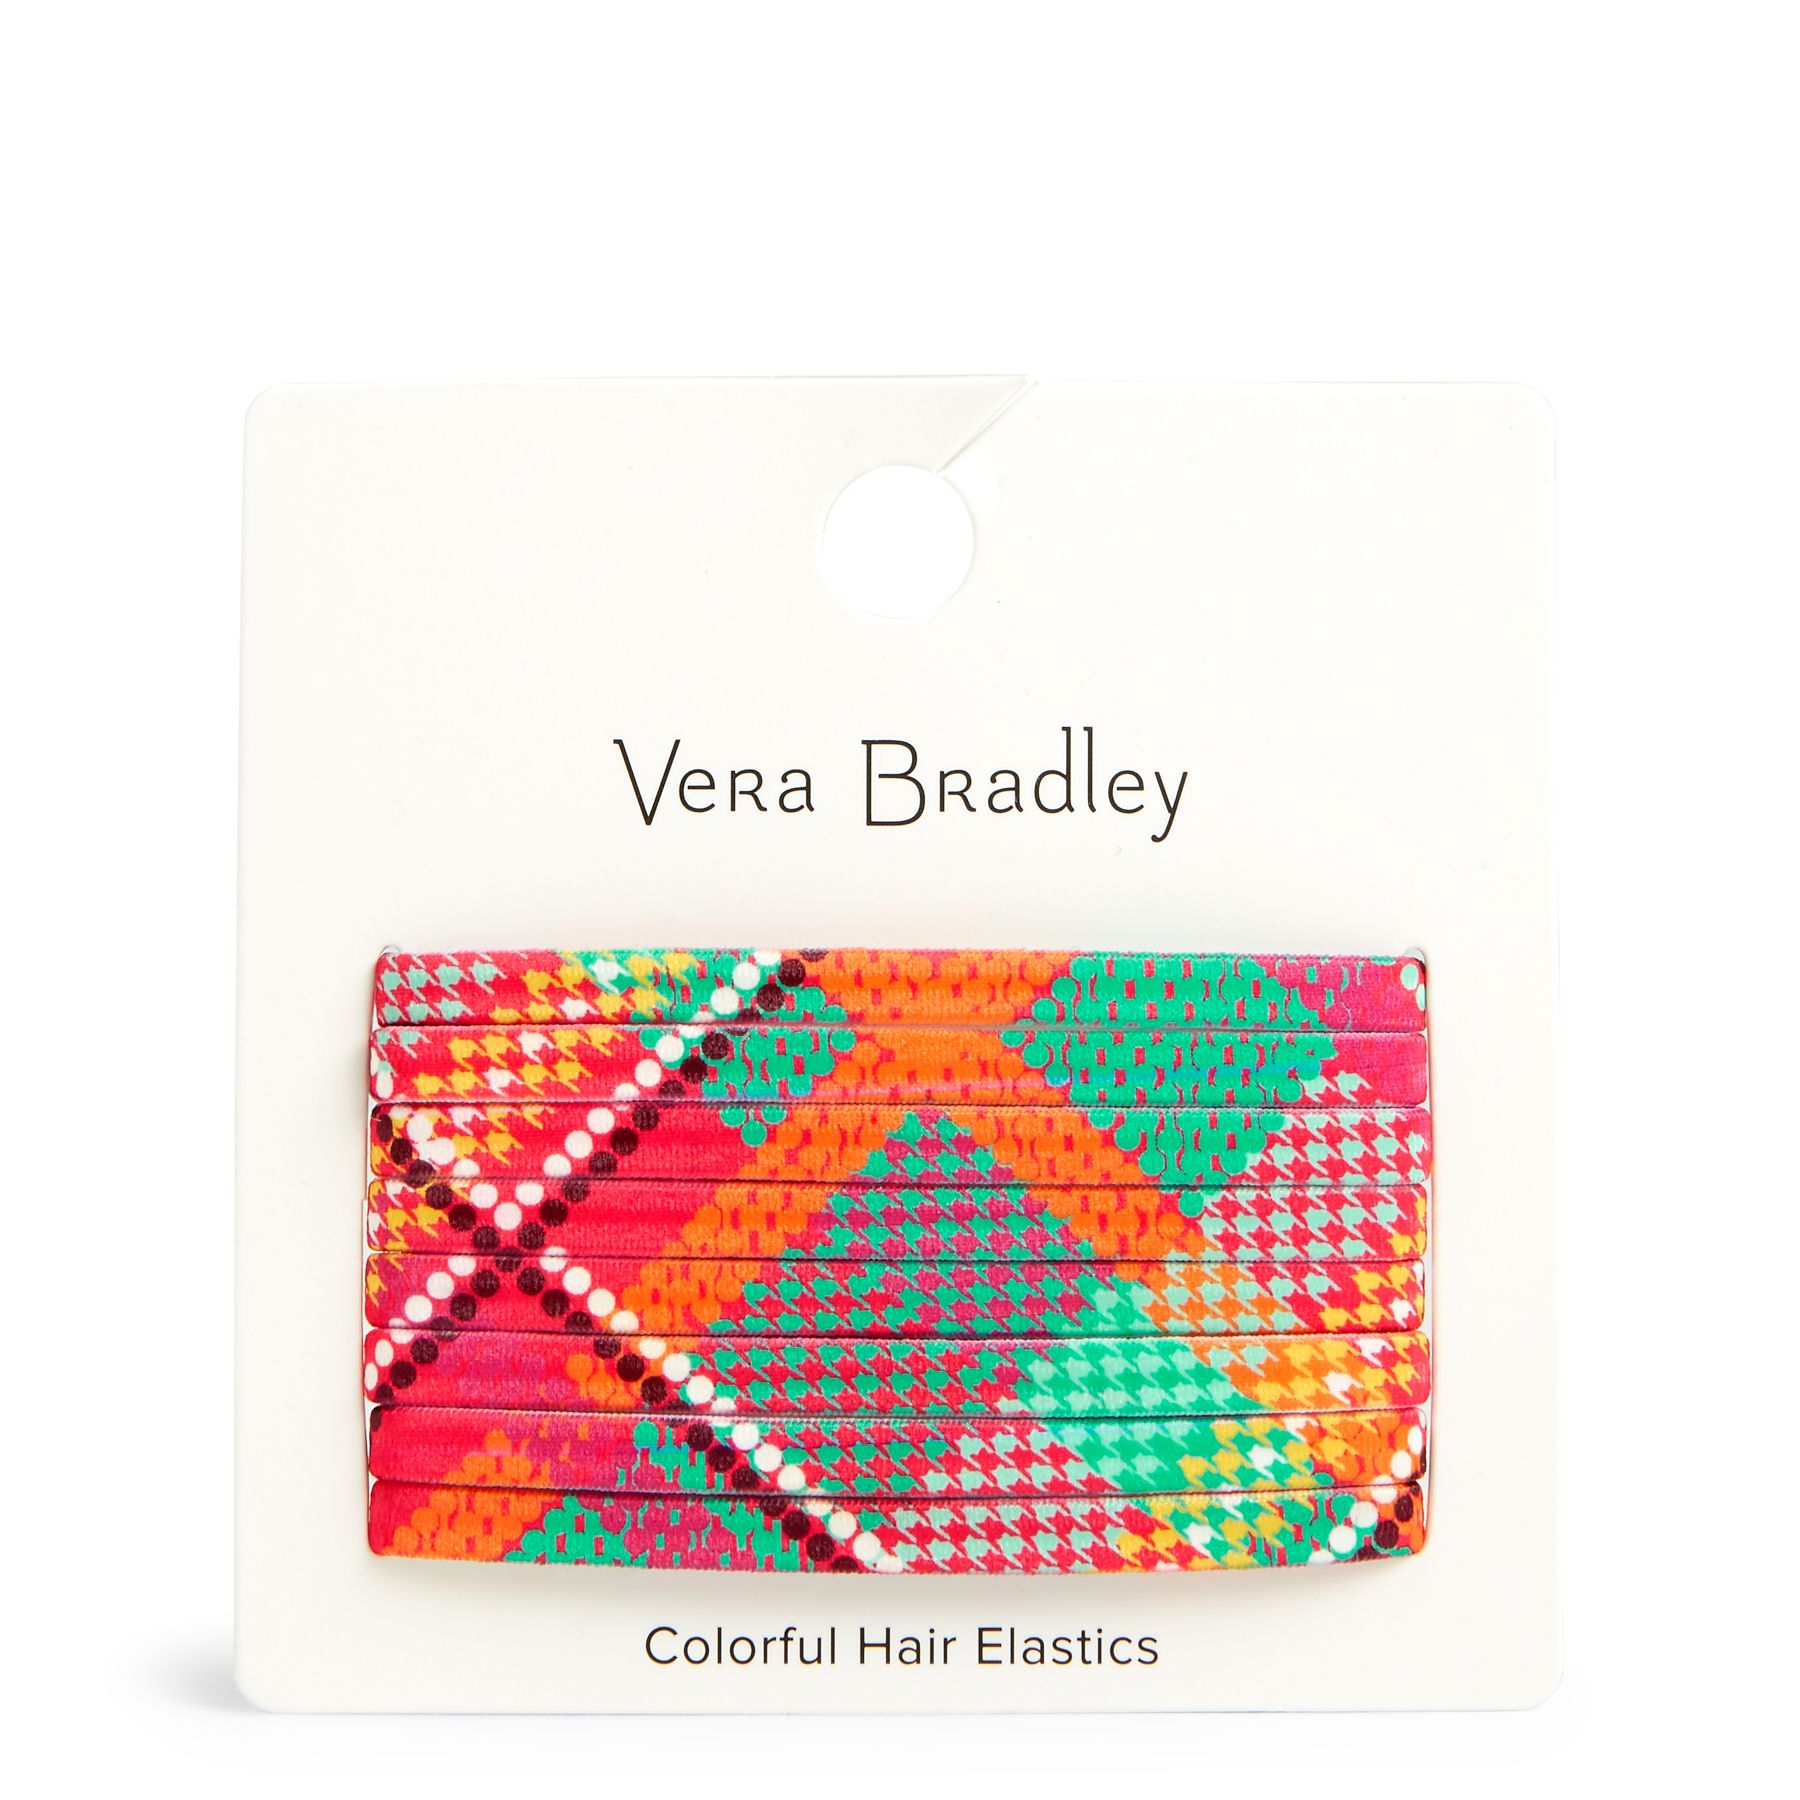 Vera Bradley Colorful Hair Elastics in Rumba GridHair Accessories